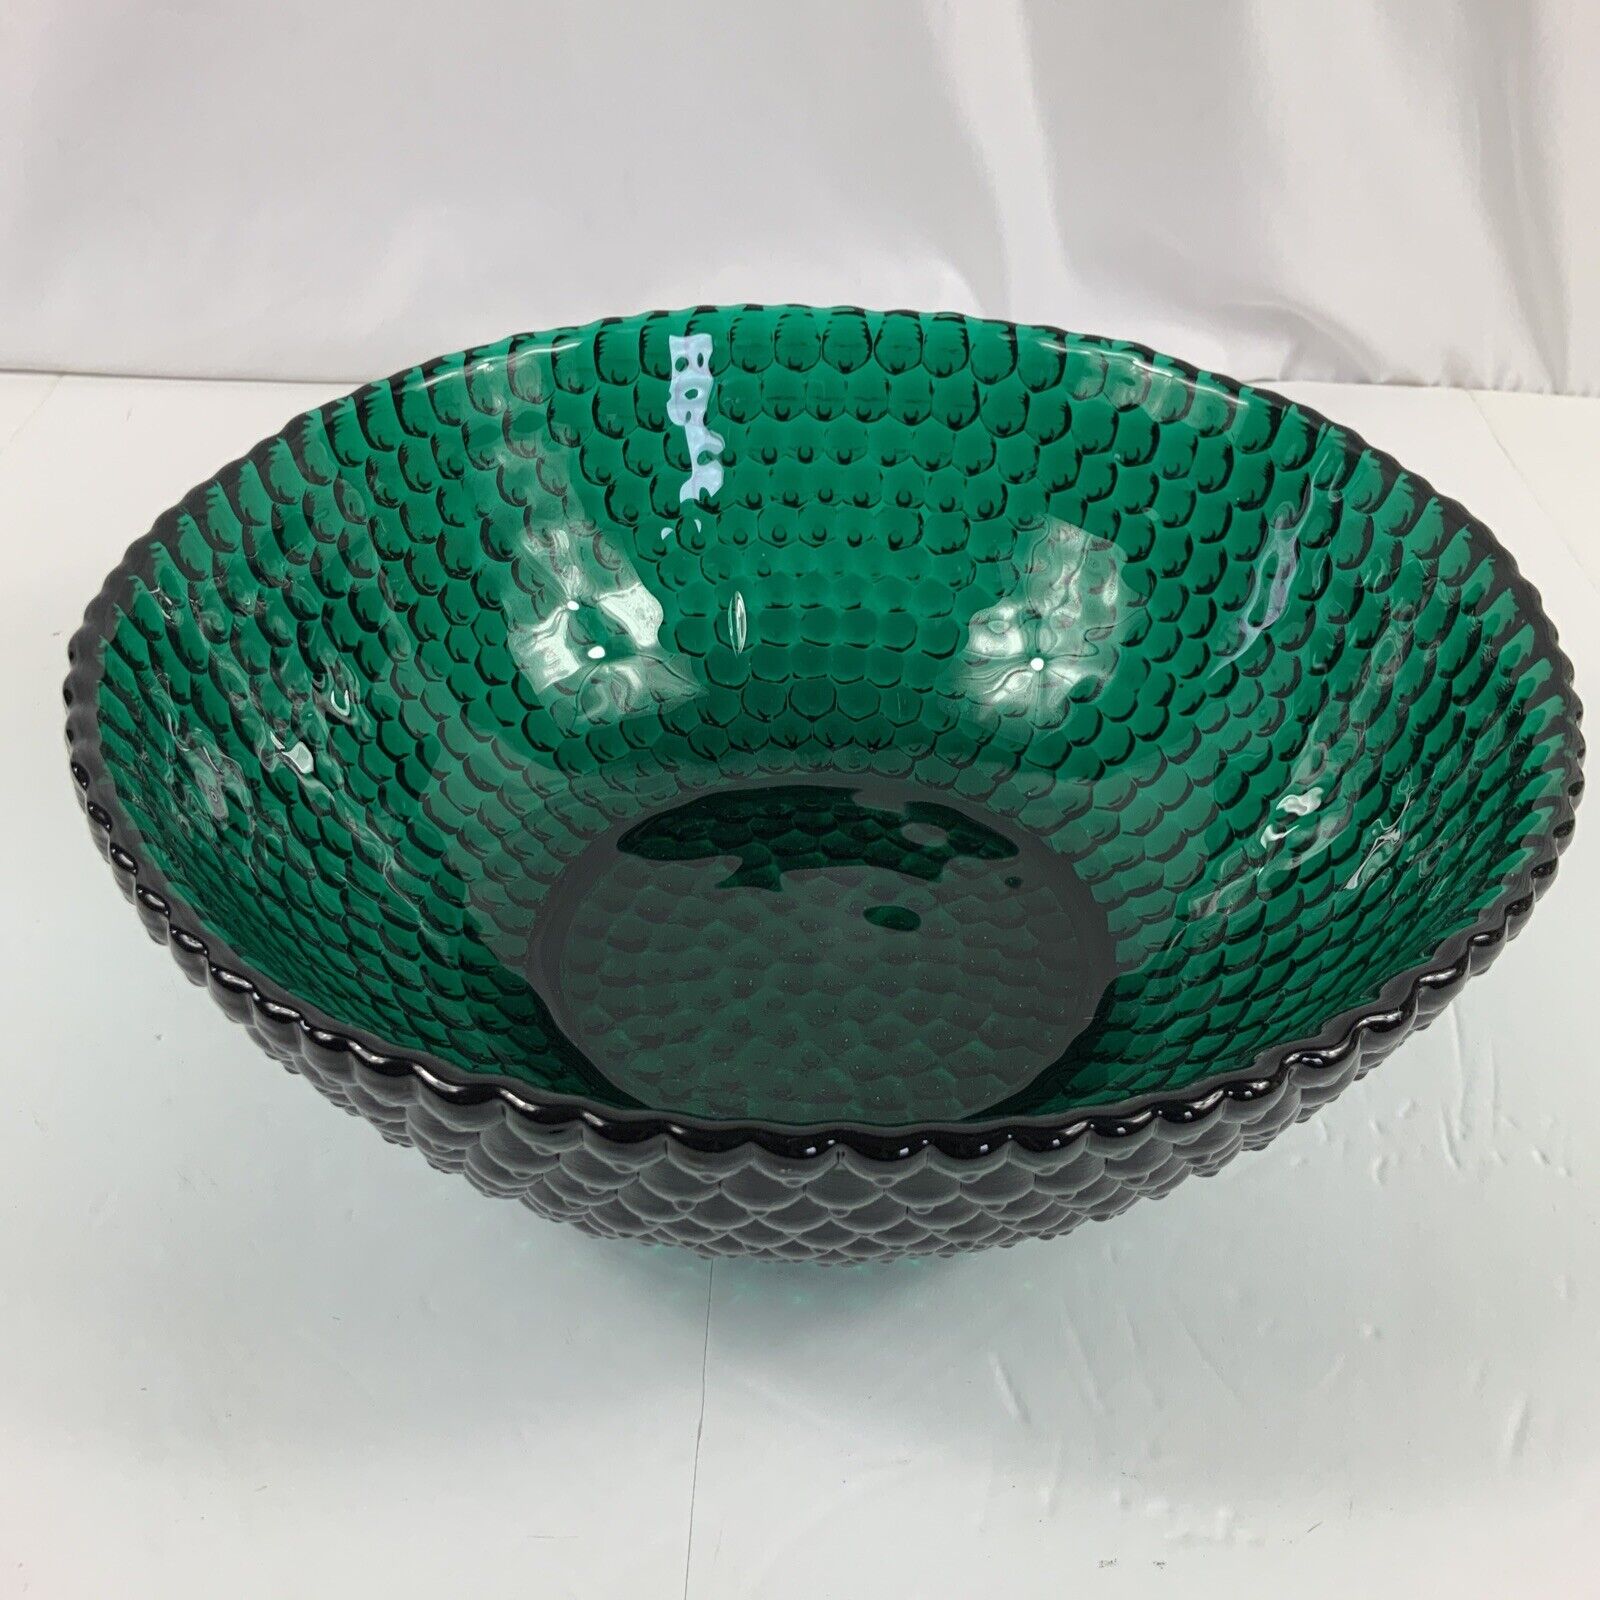 VTG Large Blenko Rare Emerald Green Centerpiece Glass Serving Hobnail Shipping included